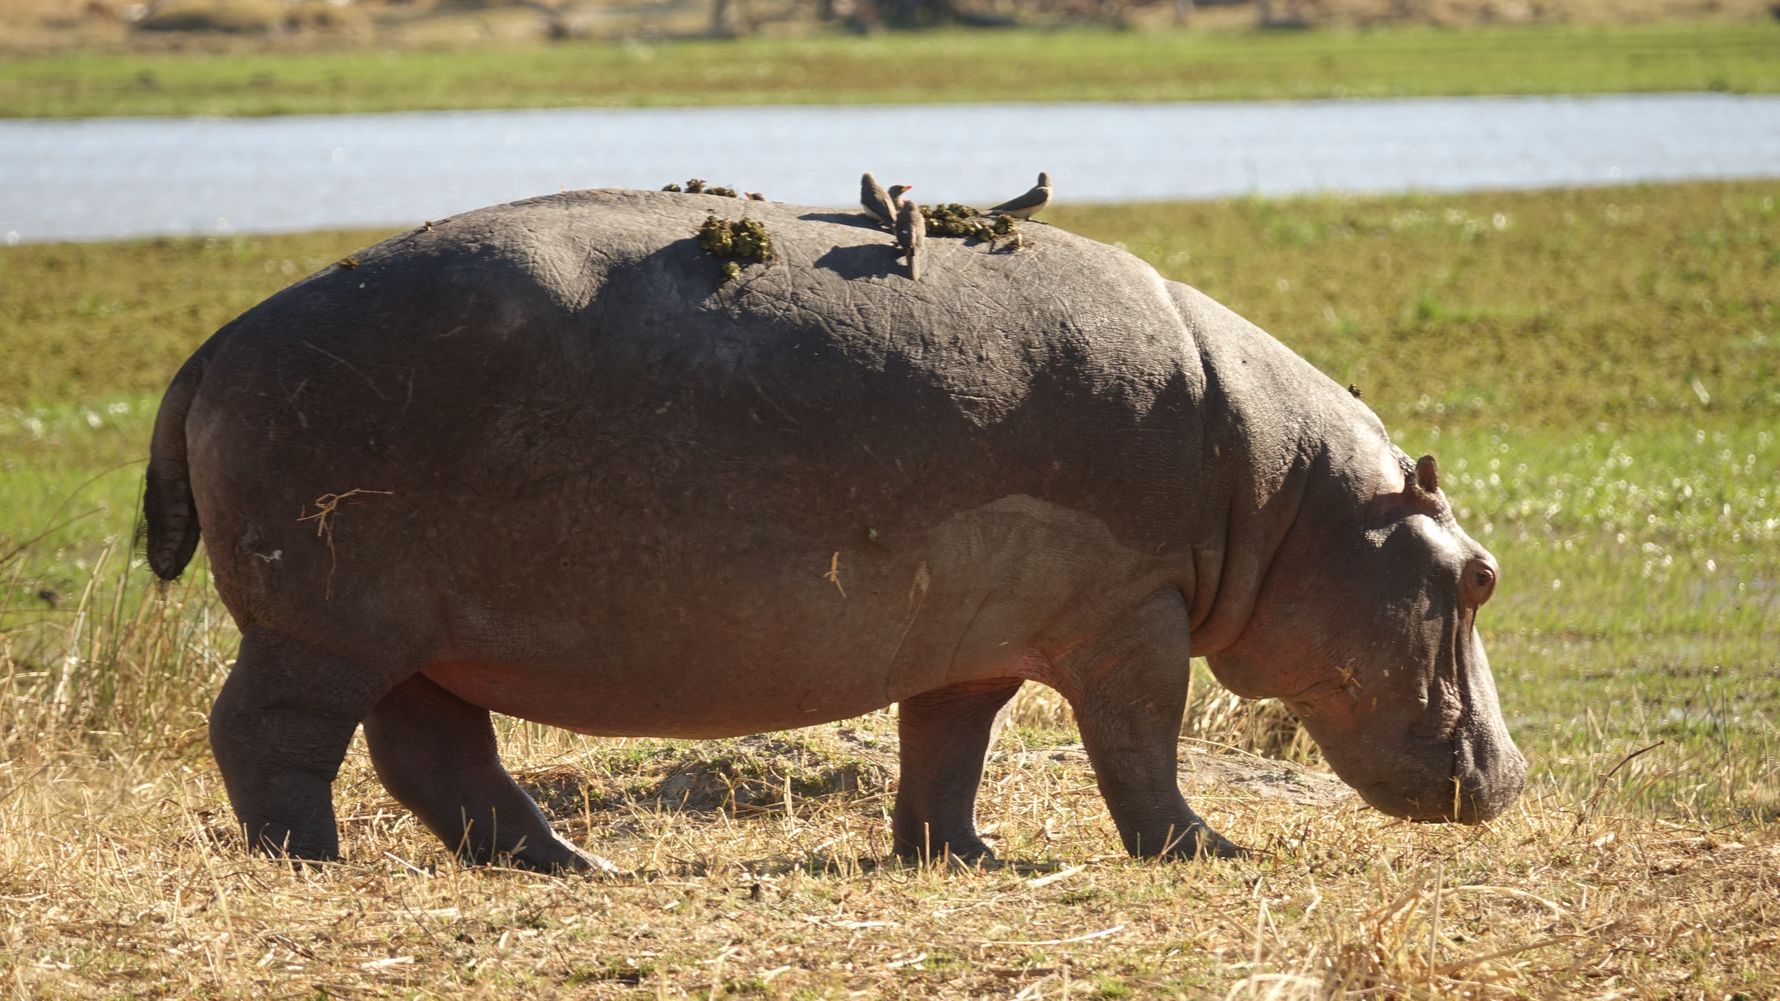 Hippopotamus Grazing at Murchison falls National Park Uganda Africa